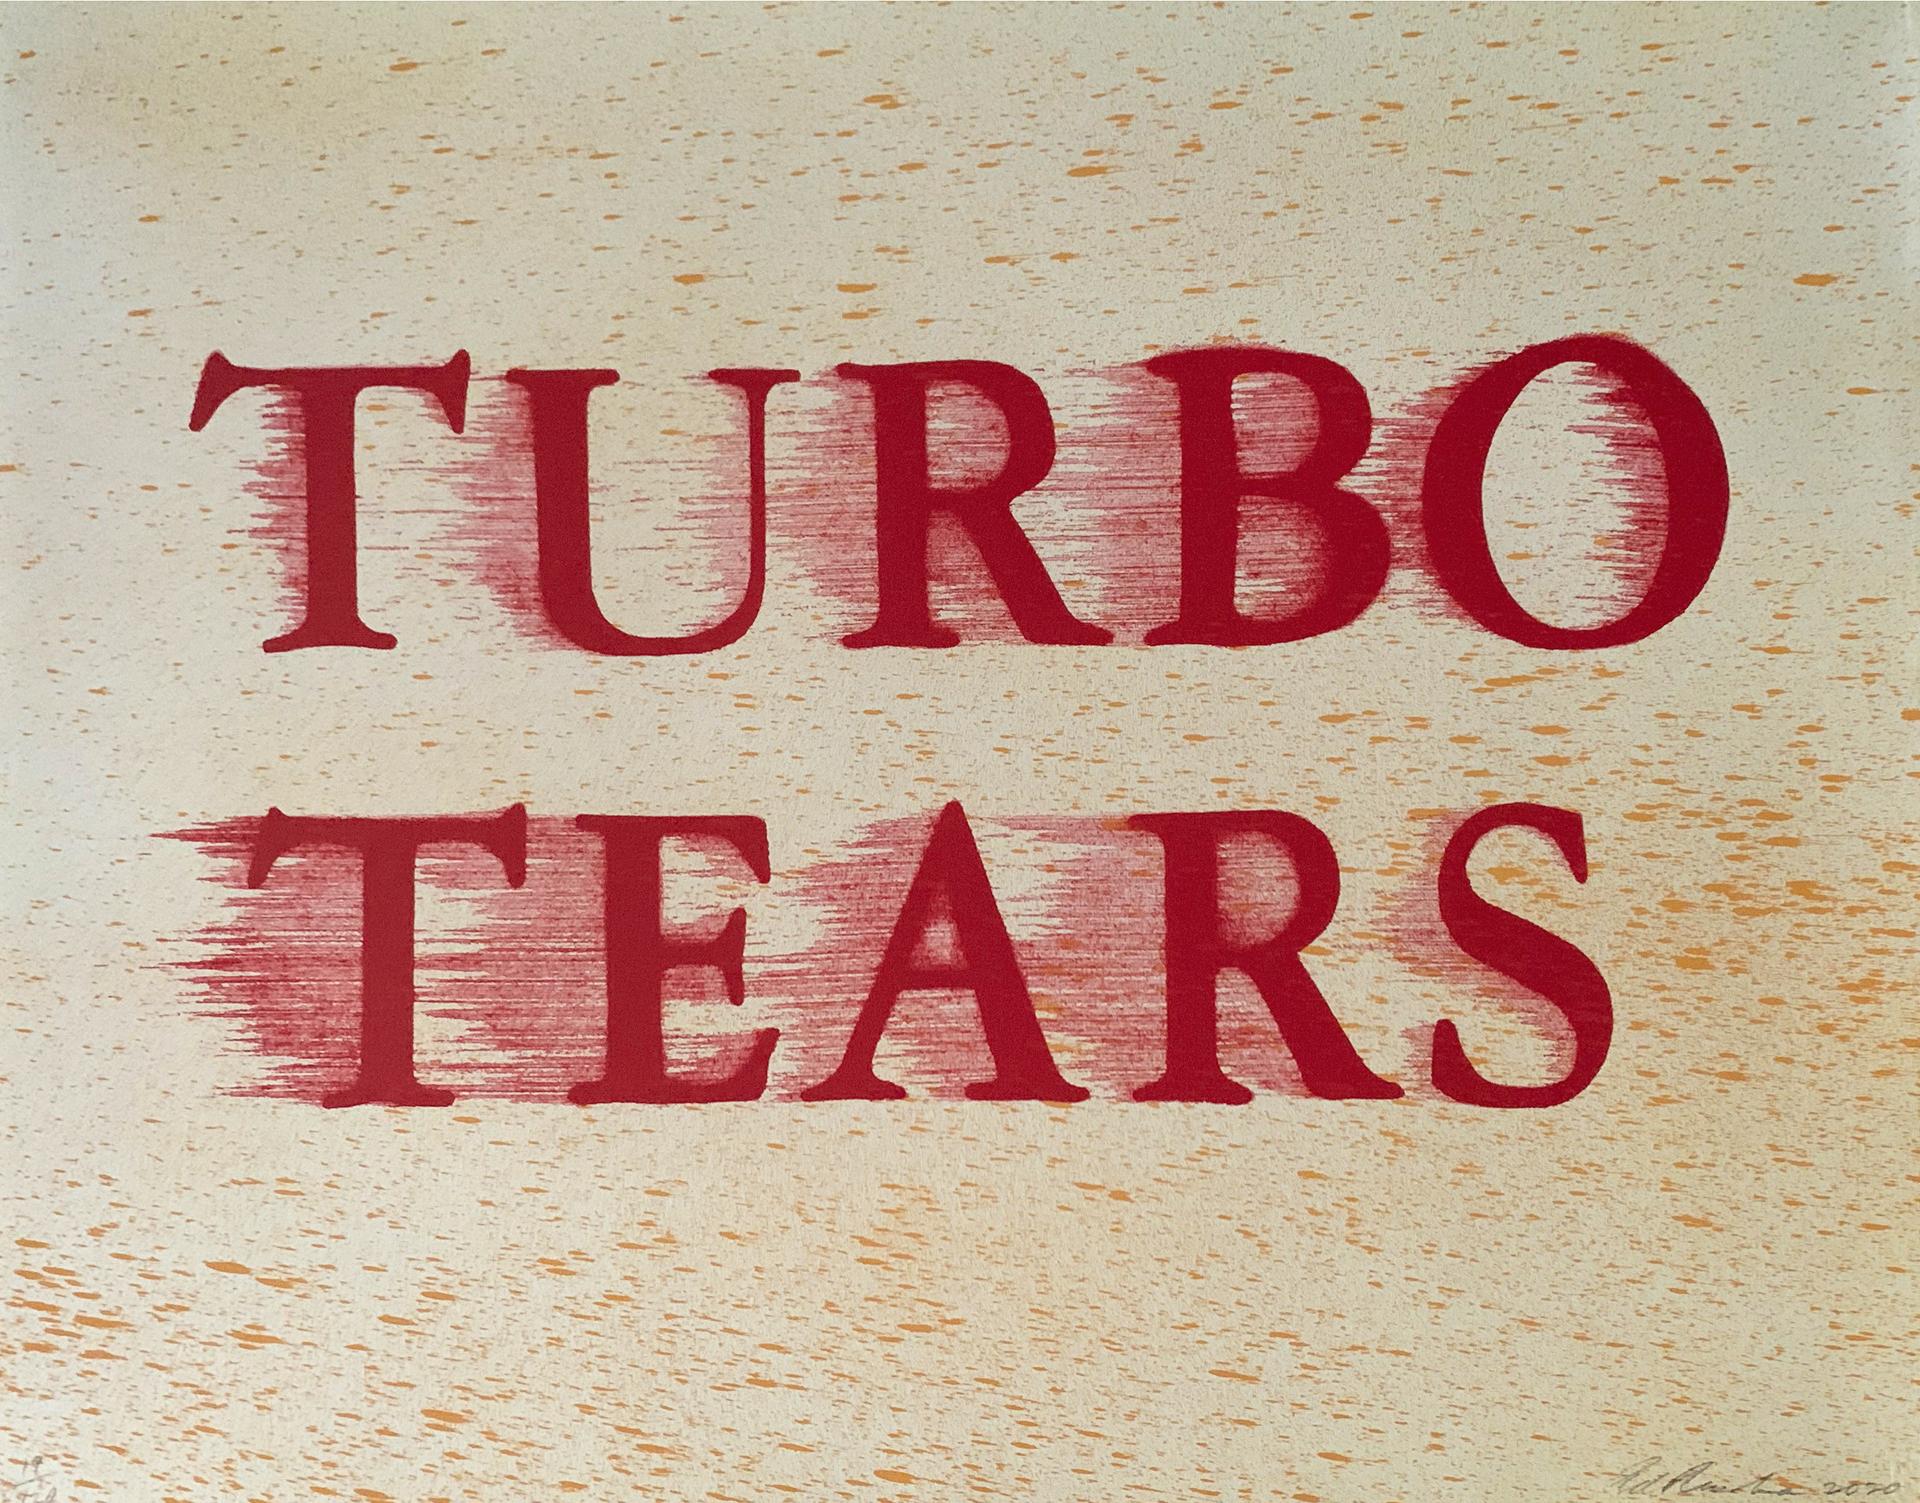 Ed Ruscha (1937) - Turbo Tears, From The 